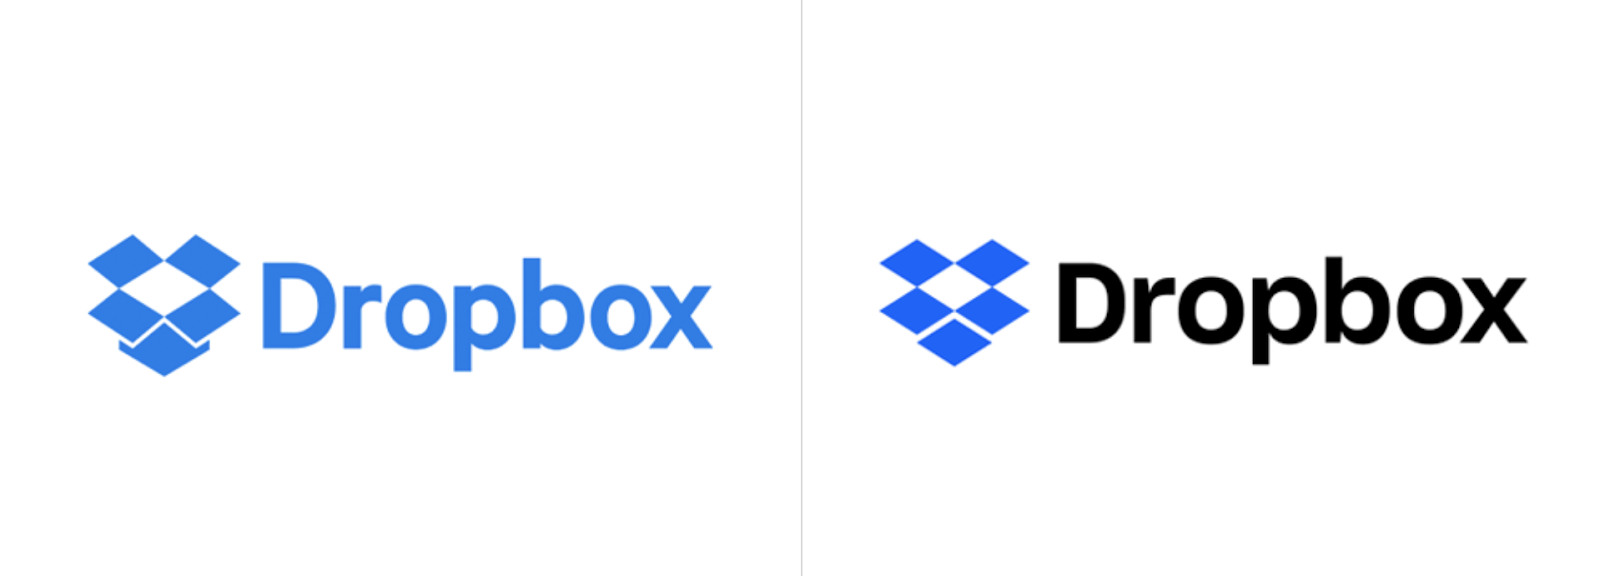 rebranding strategies: dropbox logo redesign